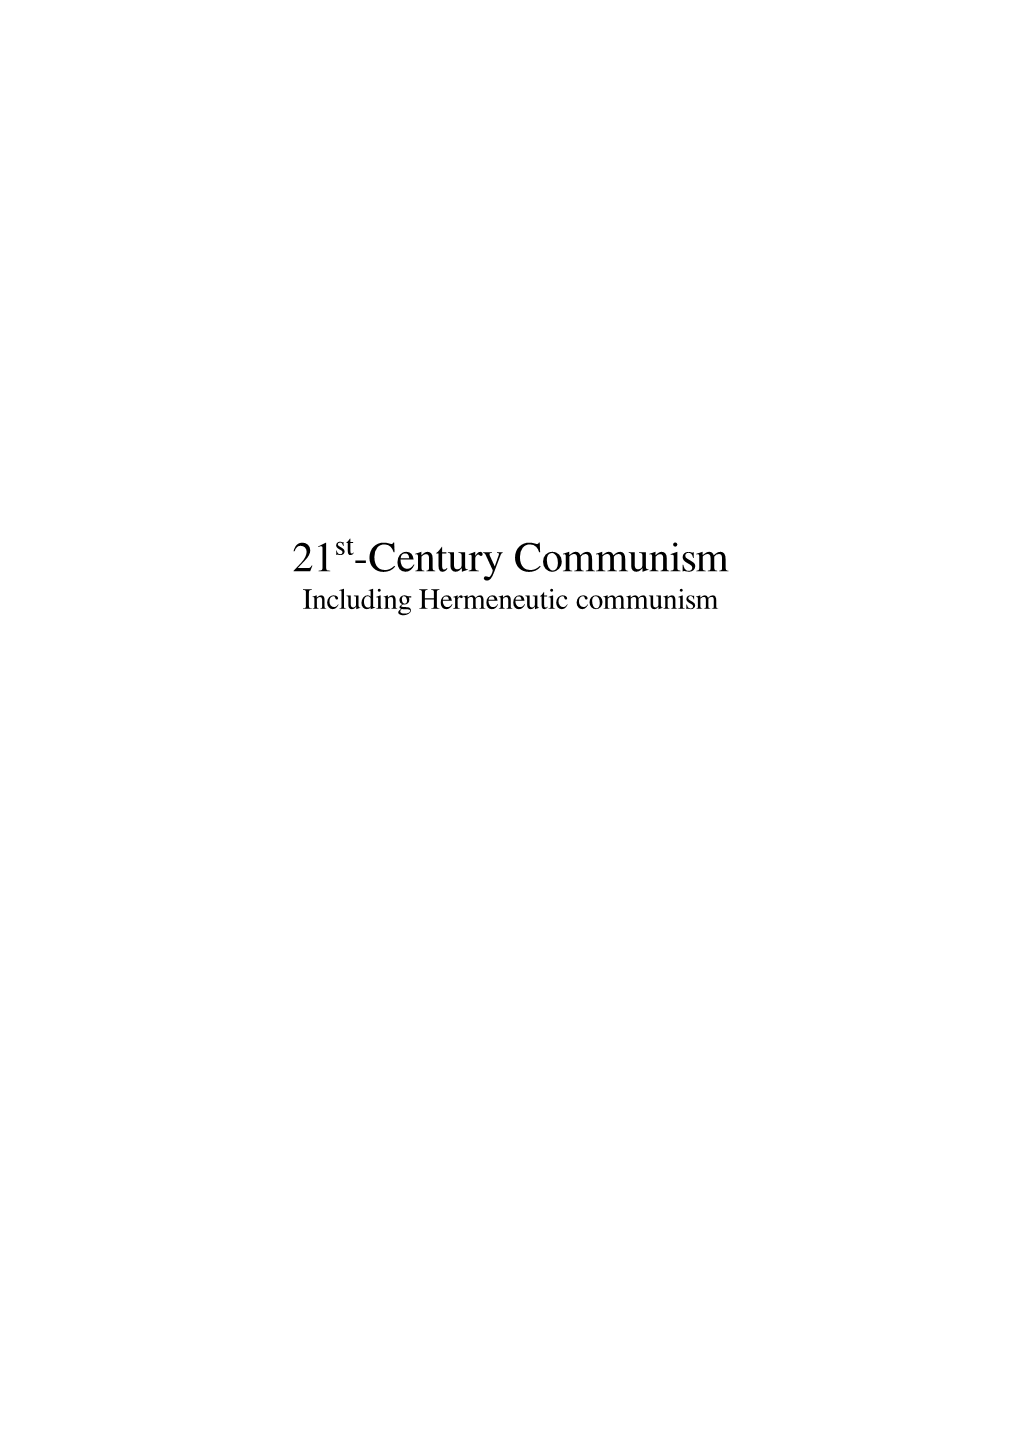 21ˢᵗ-Century Communism Including Hermeneutic Communism Contents